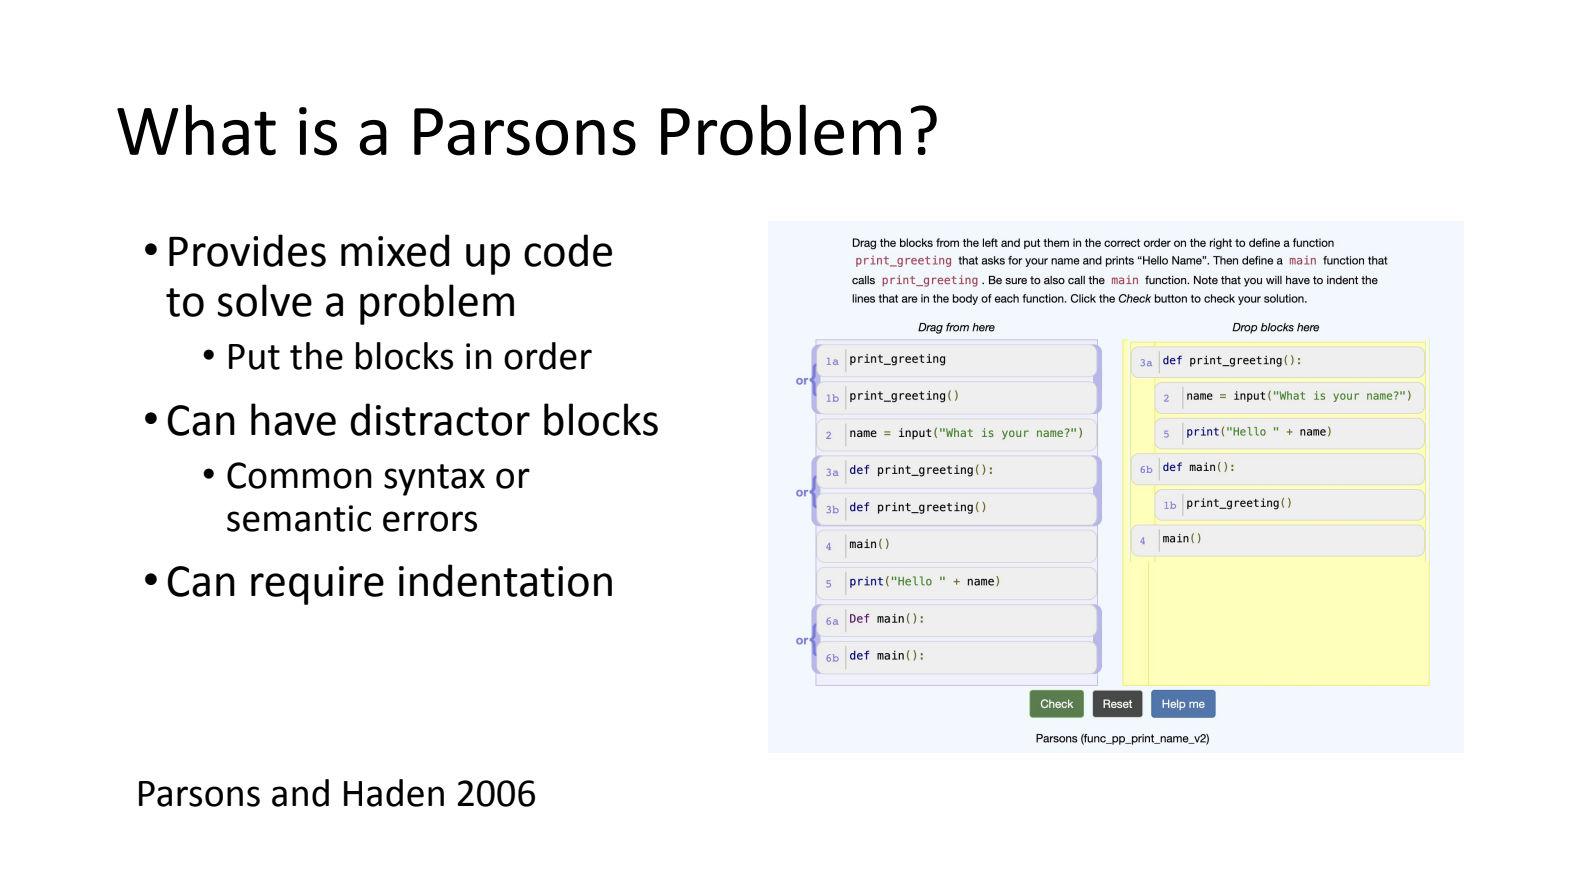 A presentation slide defining Parson's Problems.